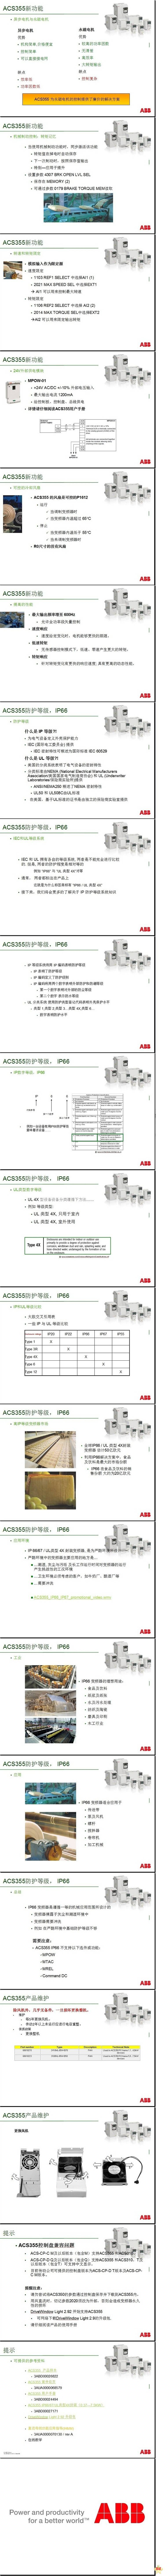 ABB 变频器 机械传动 单相 220V ACS355-01E-02A4-2 变频器,机械传动,微型传动,ACS355,ABB